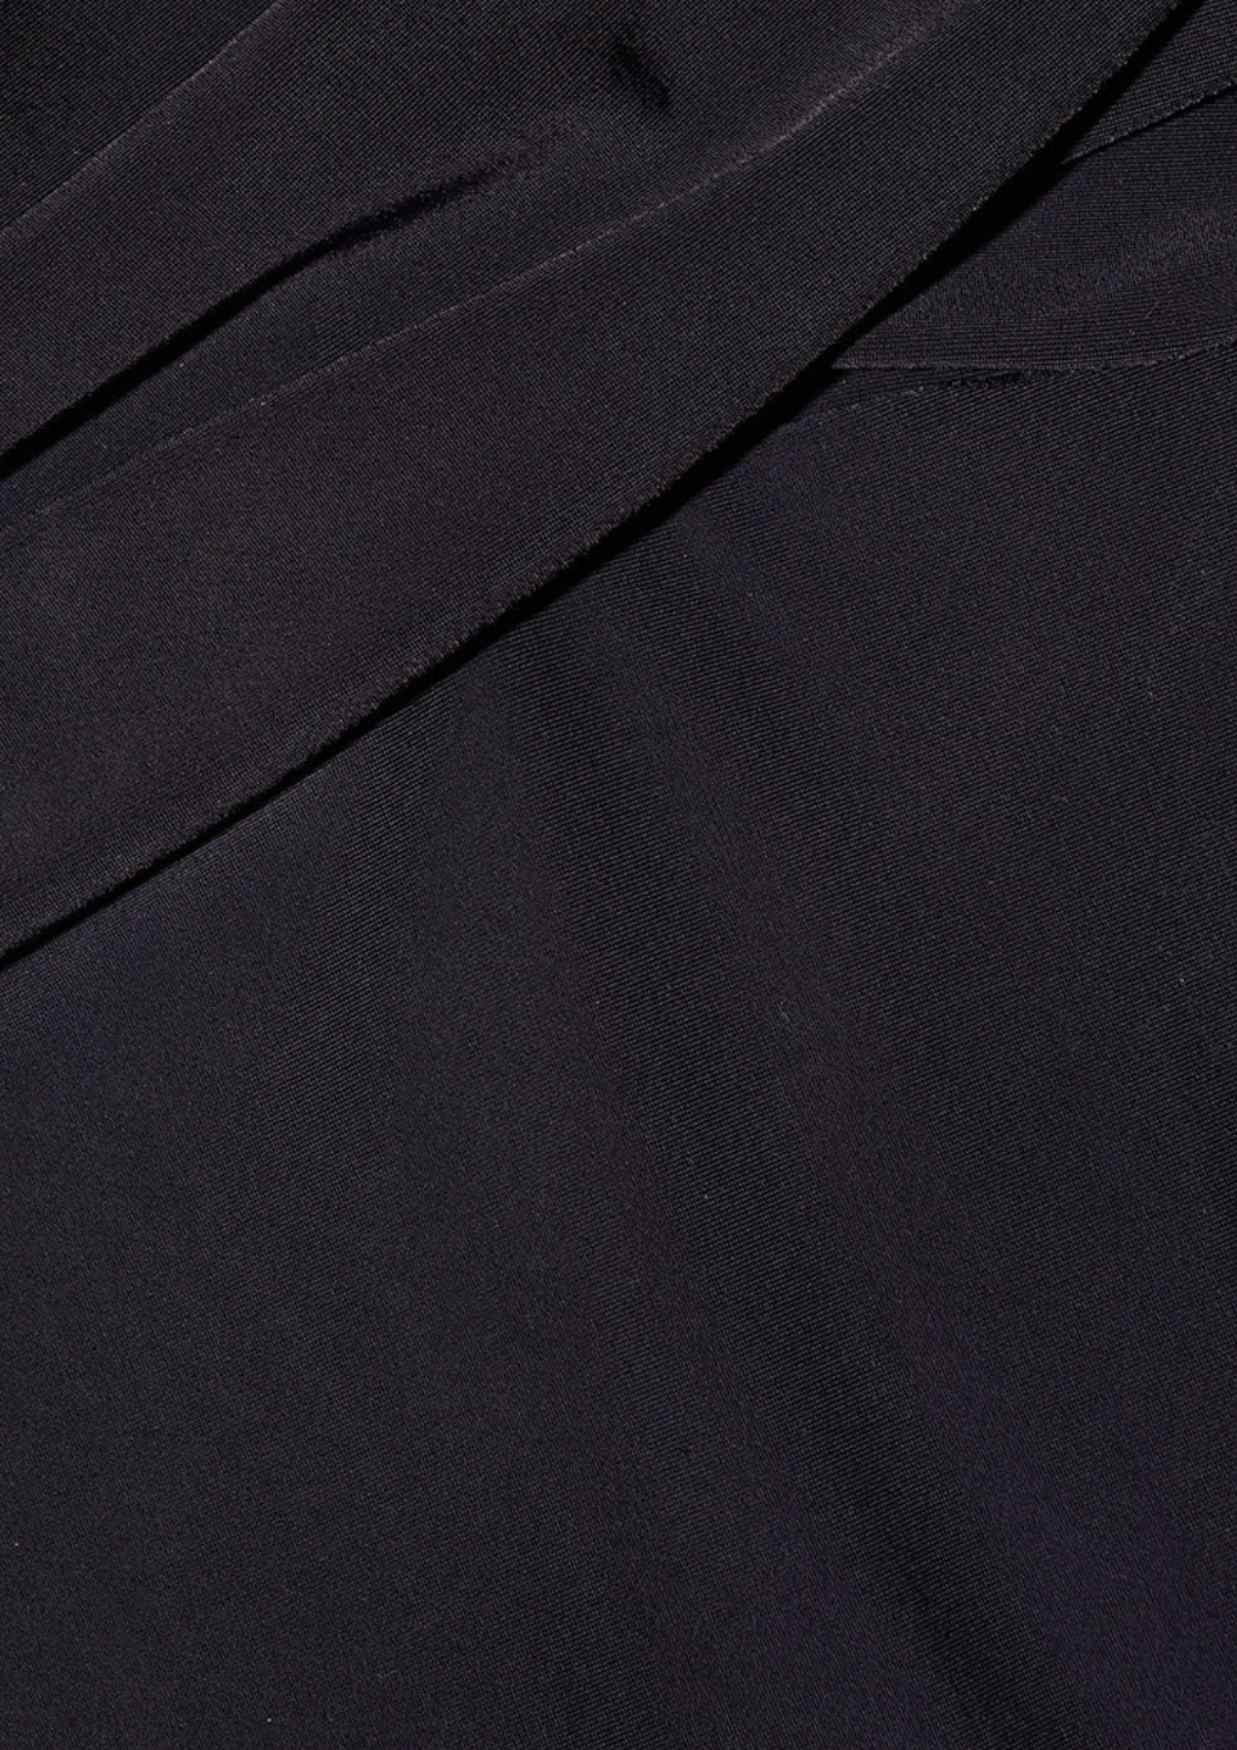 SELF-PORTRAIT - Black Jersey Midi Dress